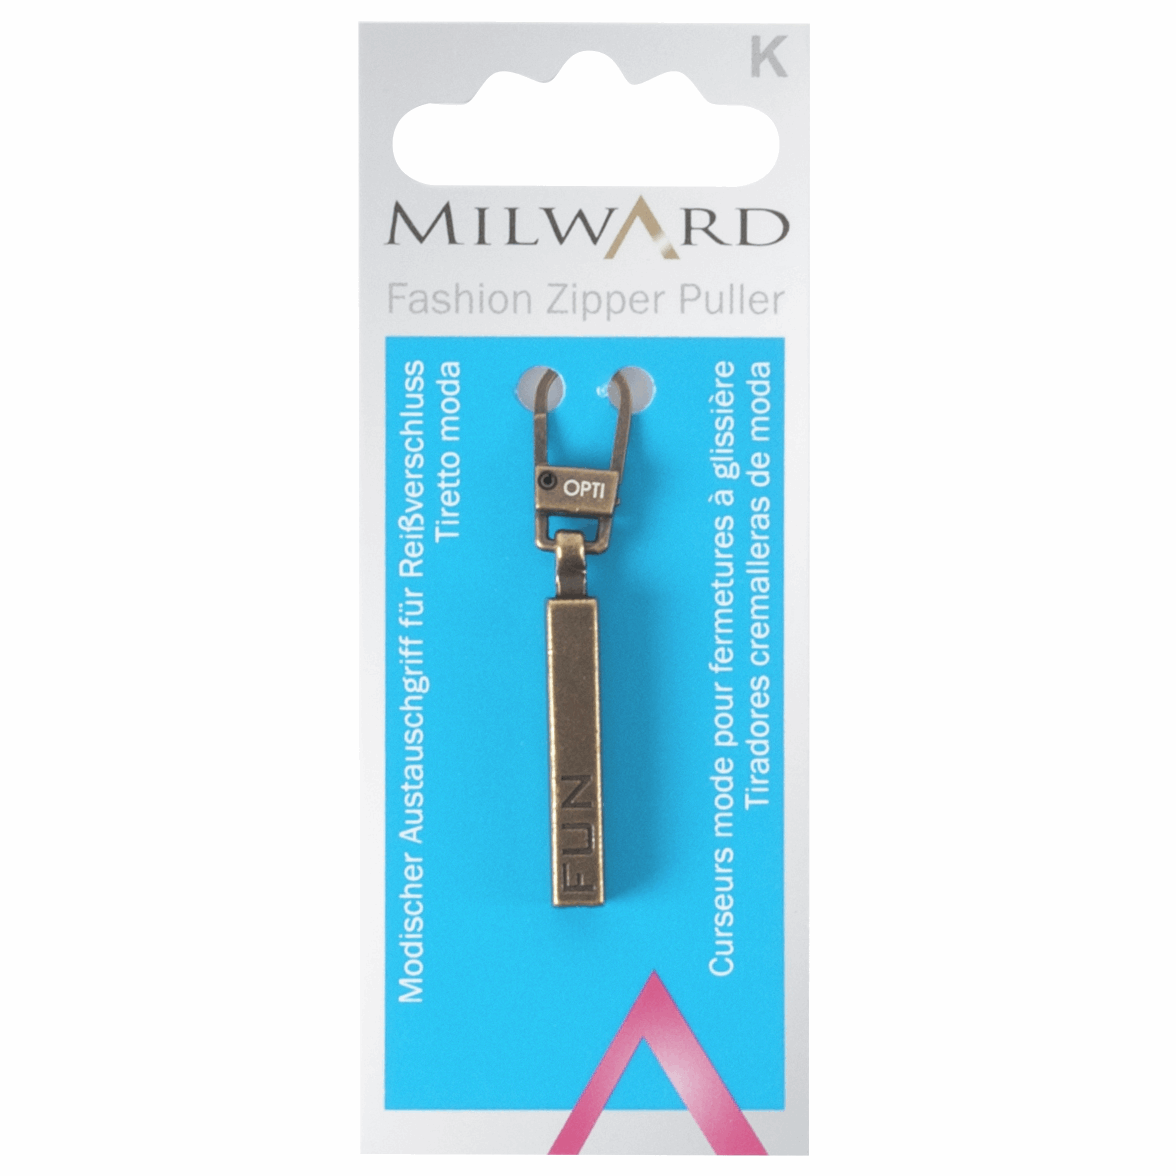 Milward Antique Fashion Zipper Puller